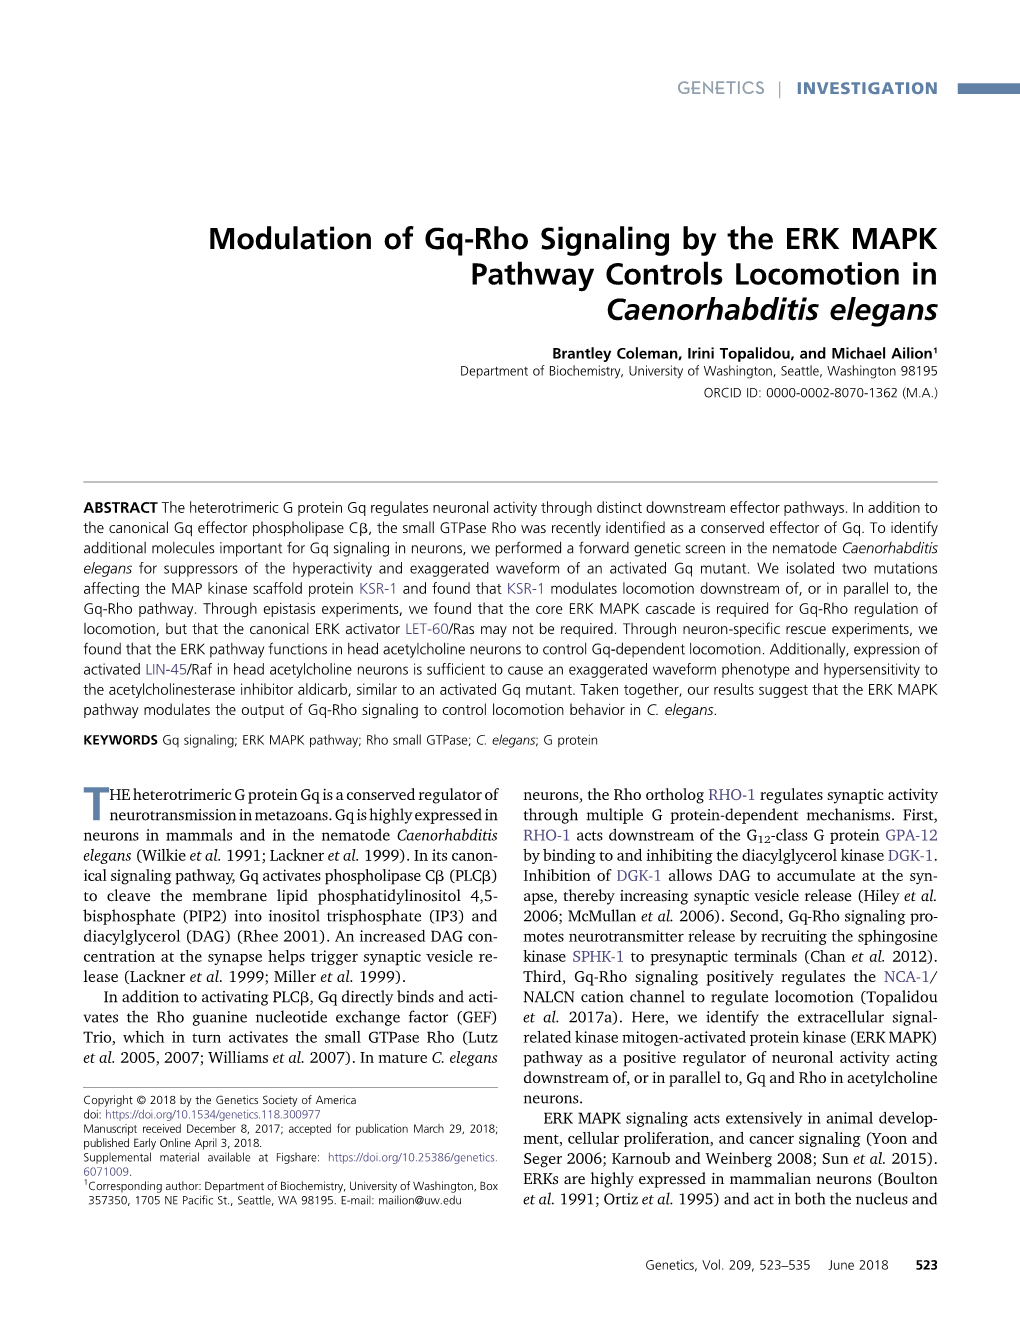 Modulation of Gq-Rho Signaling by the ERK MAPK Pathway Controls Locomotion in Caenorhabditis Elegans